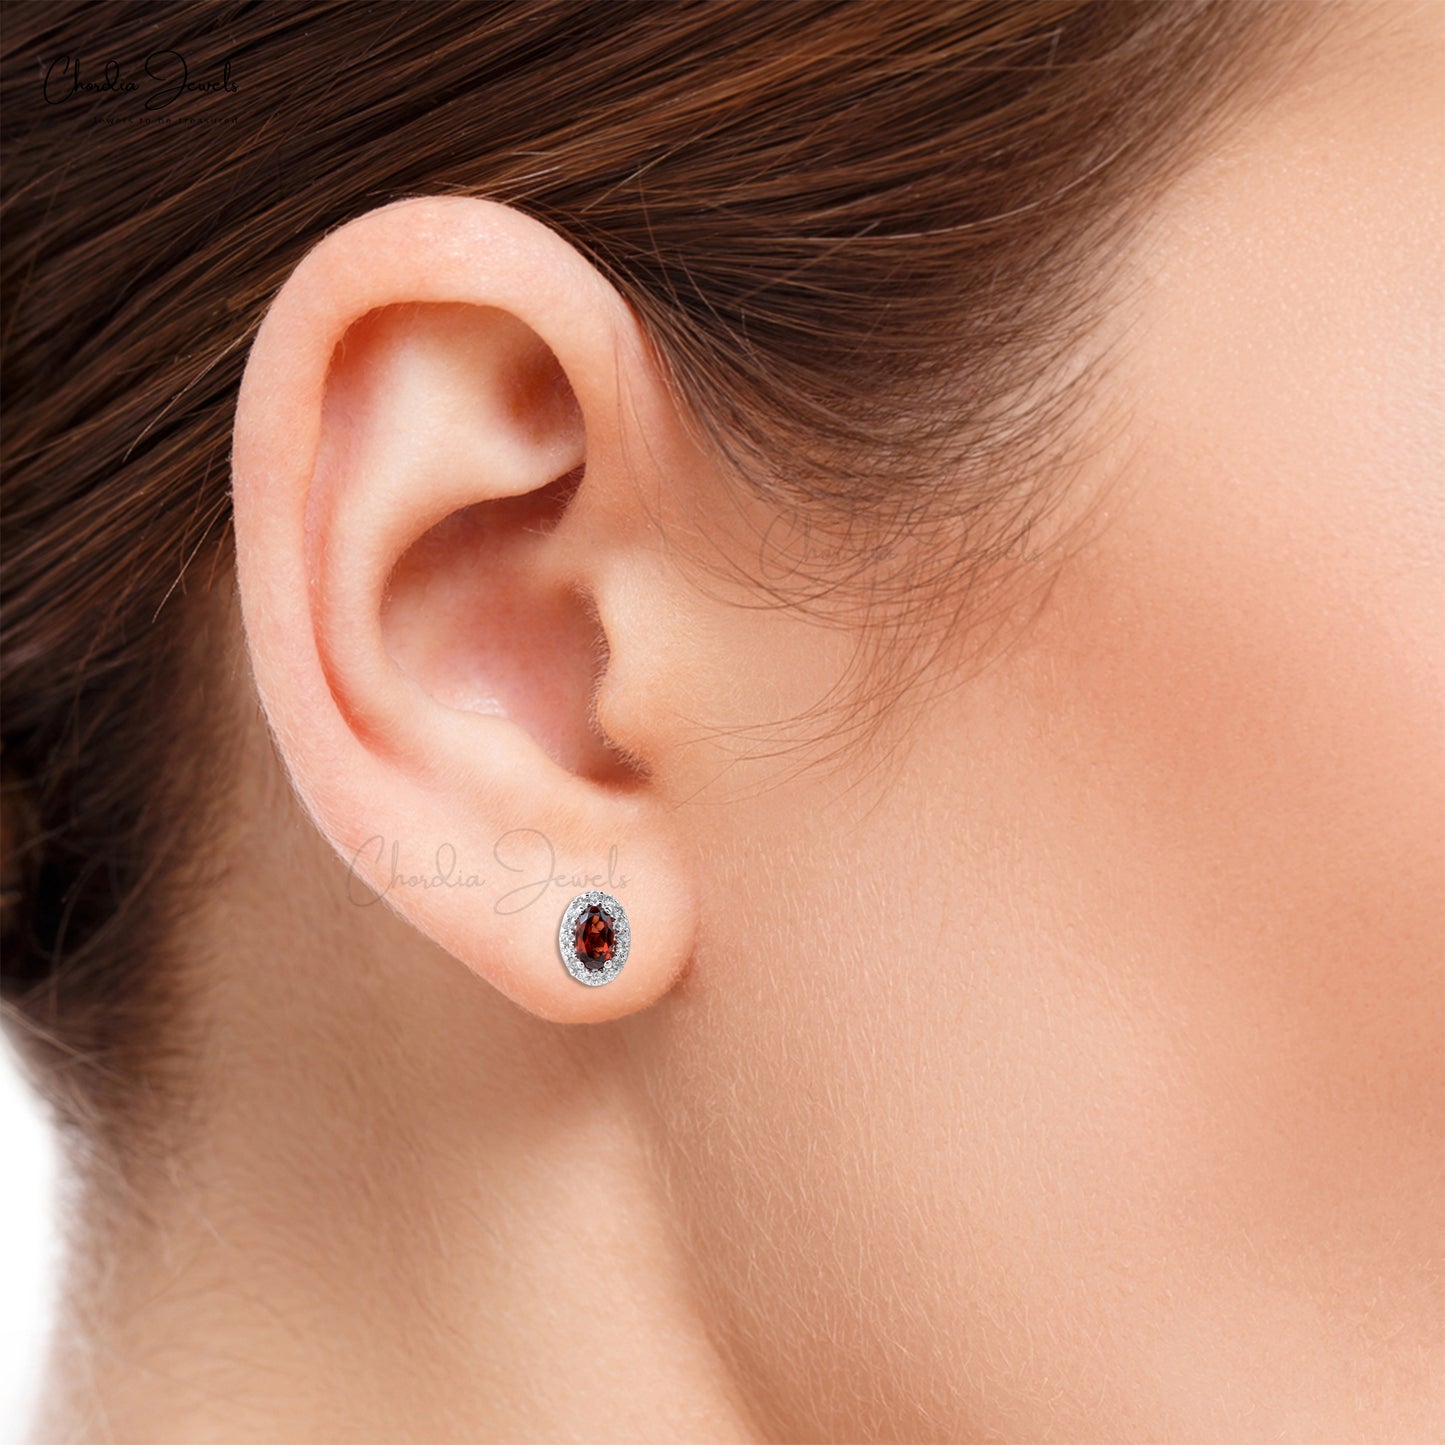 Natural Garnet Earrings 5x3mm Oval Cut Gemstone Earrings 14k White Gold Halo Earrings For Her